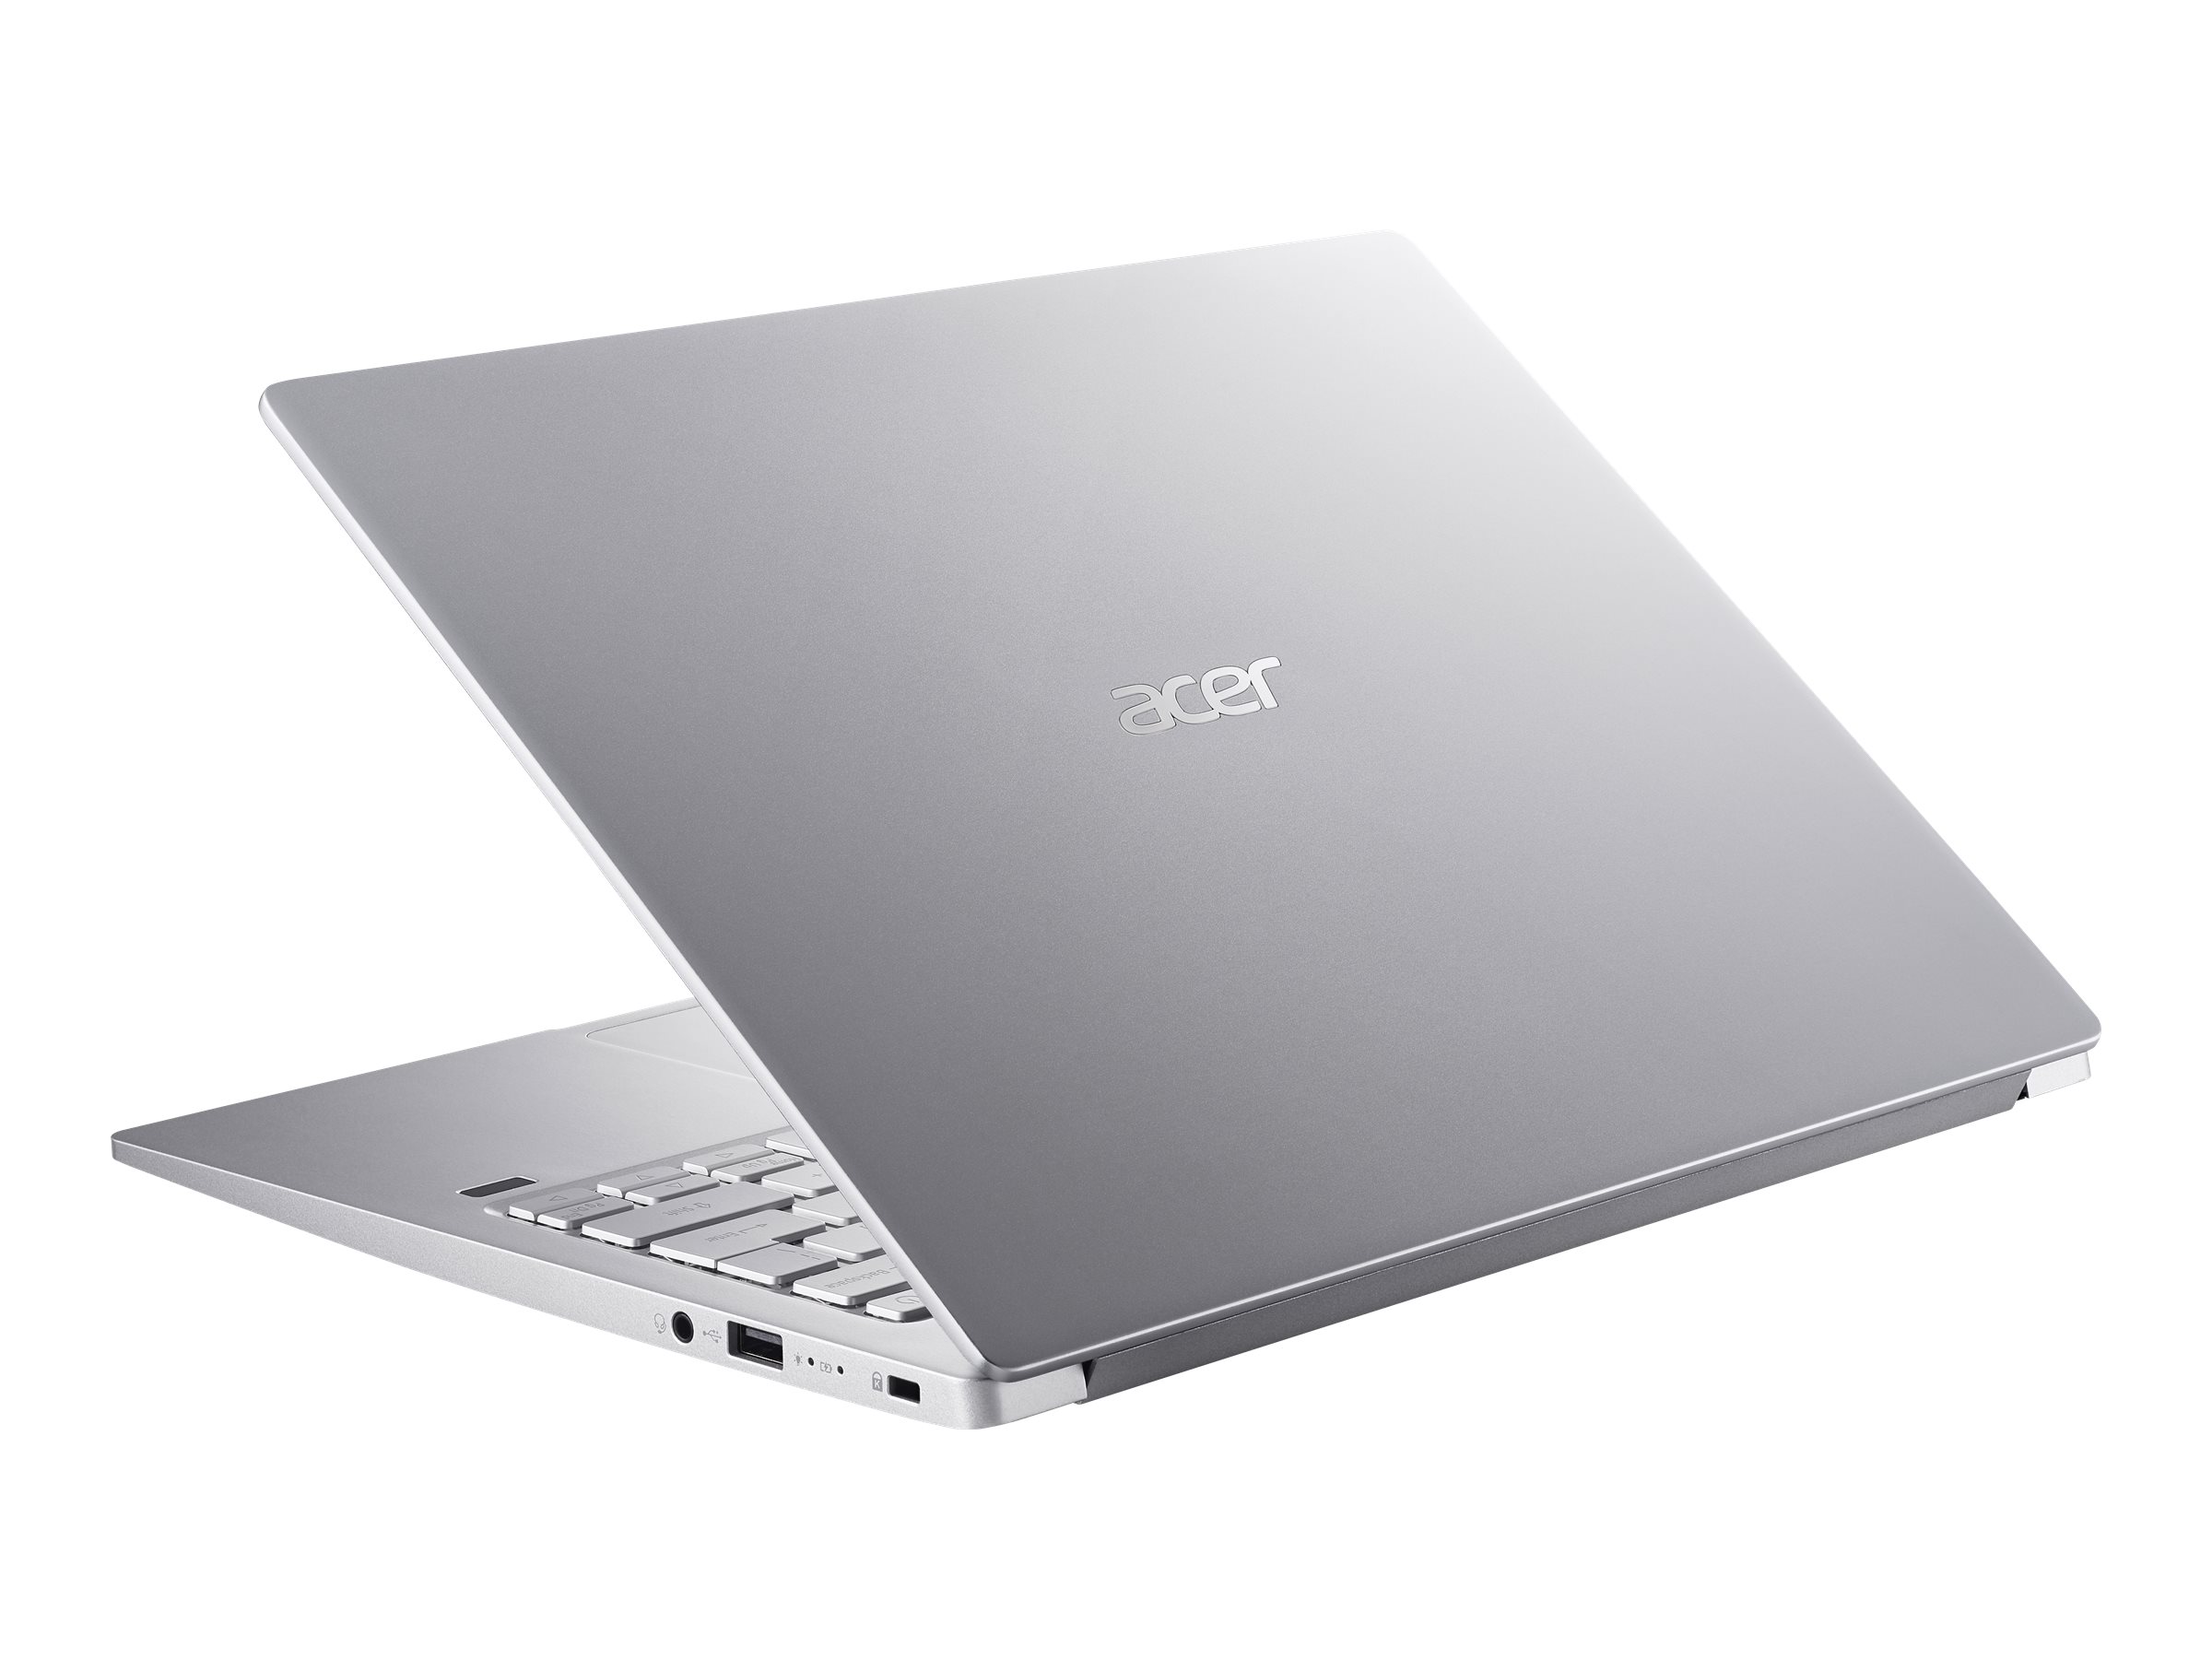 Acer Swift 3, 13.5" 2K UHD, Intel Core i5 1035G4, 8GB RAM, 256GB SSD, Silver, Windows 10, SF313-52-526M - image 4 of 11